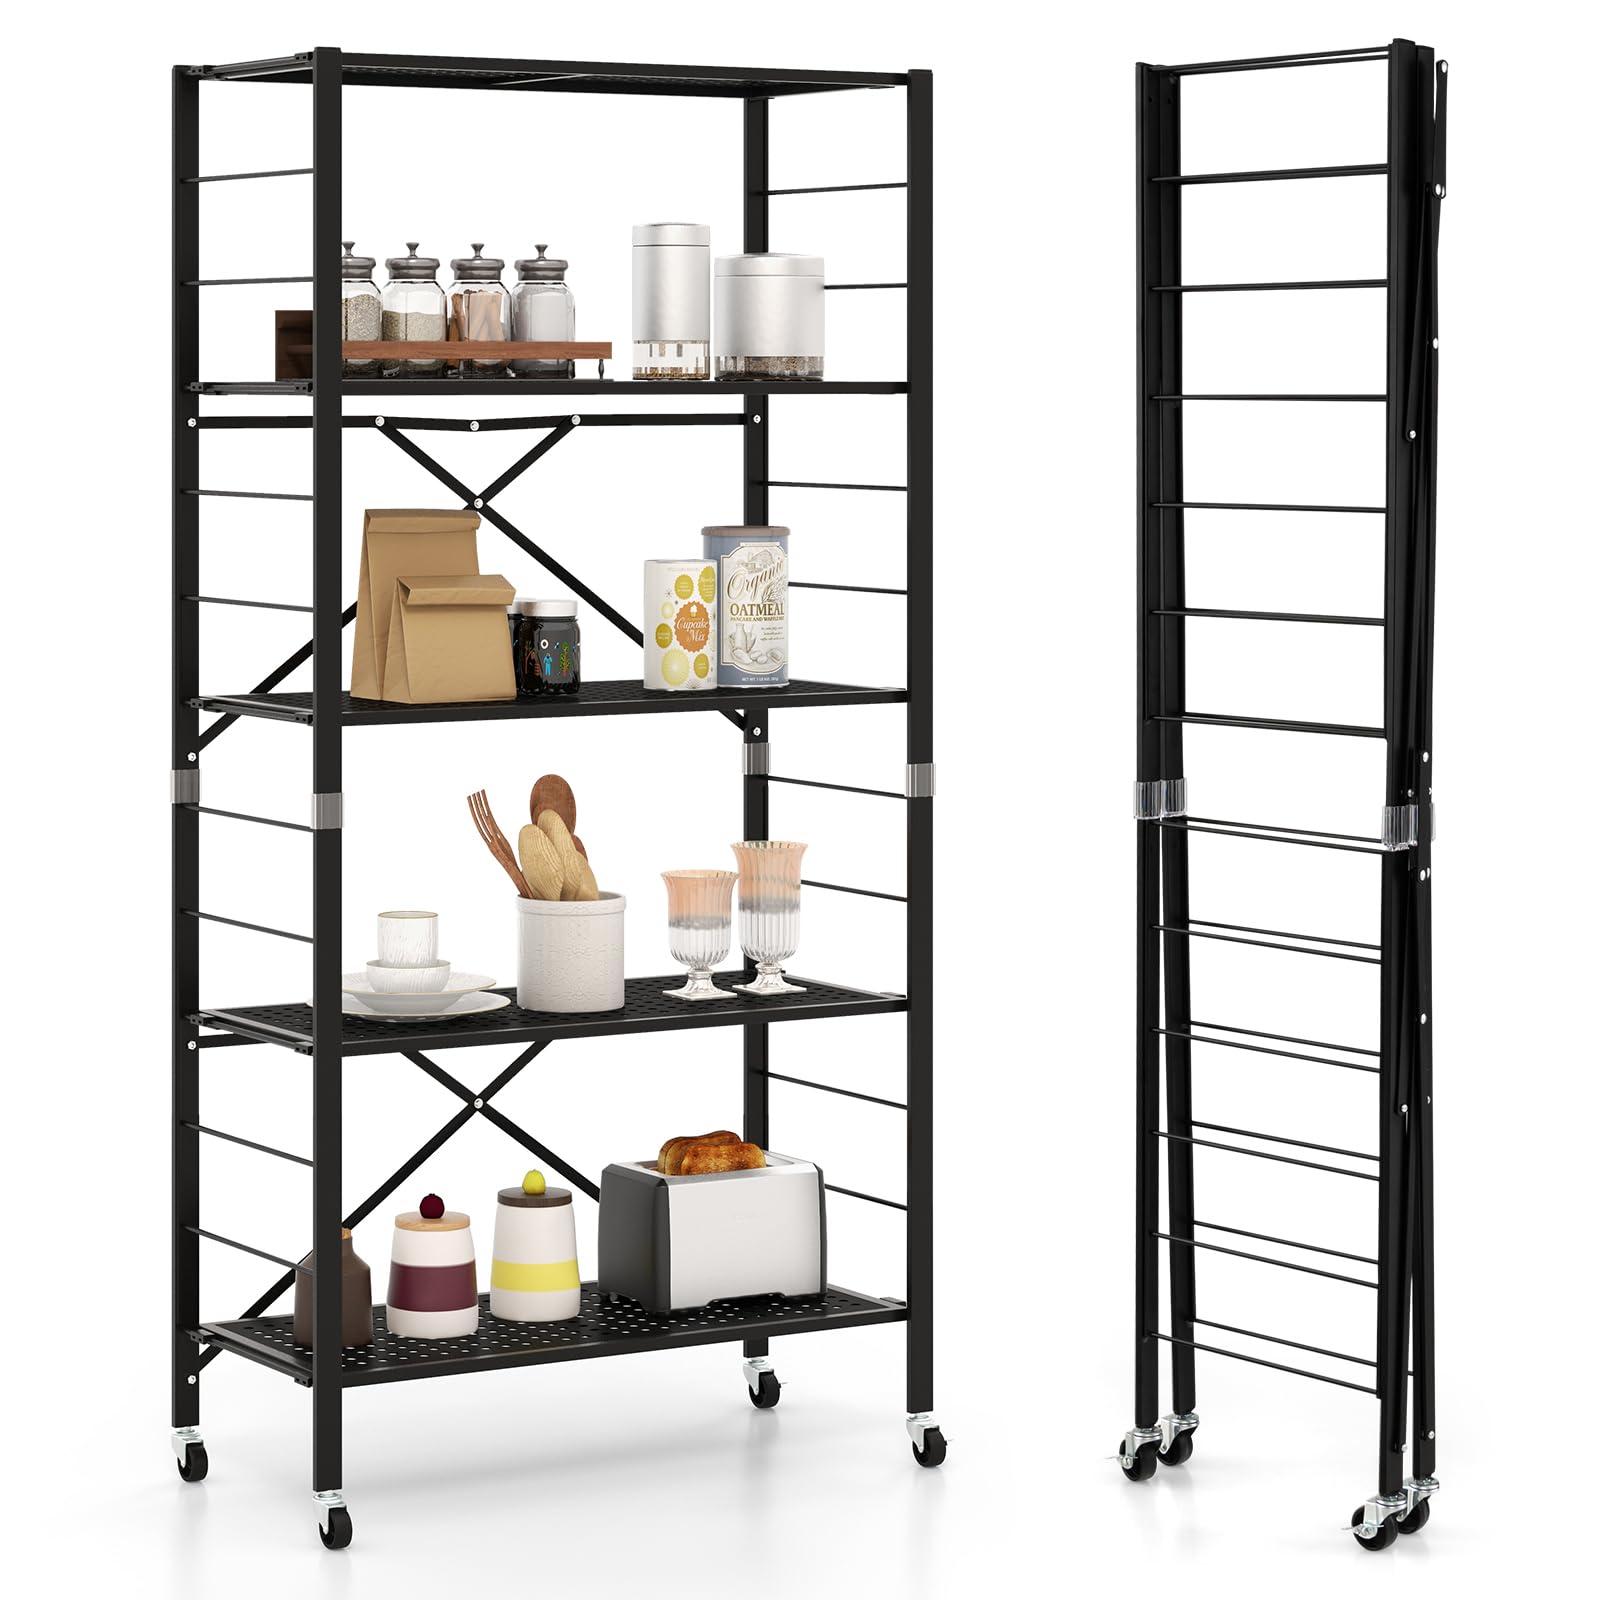 Giantex 5-Tier Folding Bookshelf with Wheels Black, 60" Tall Foldable Metal Shelves for Storage